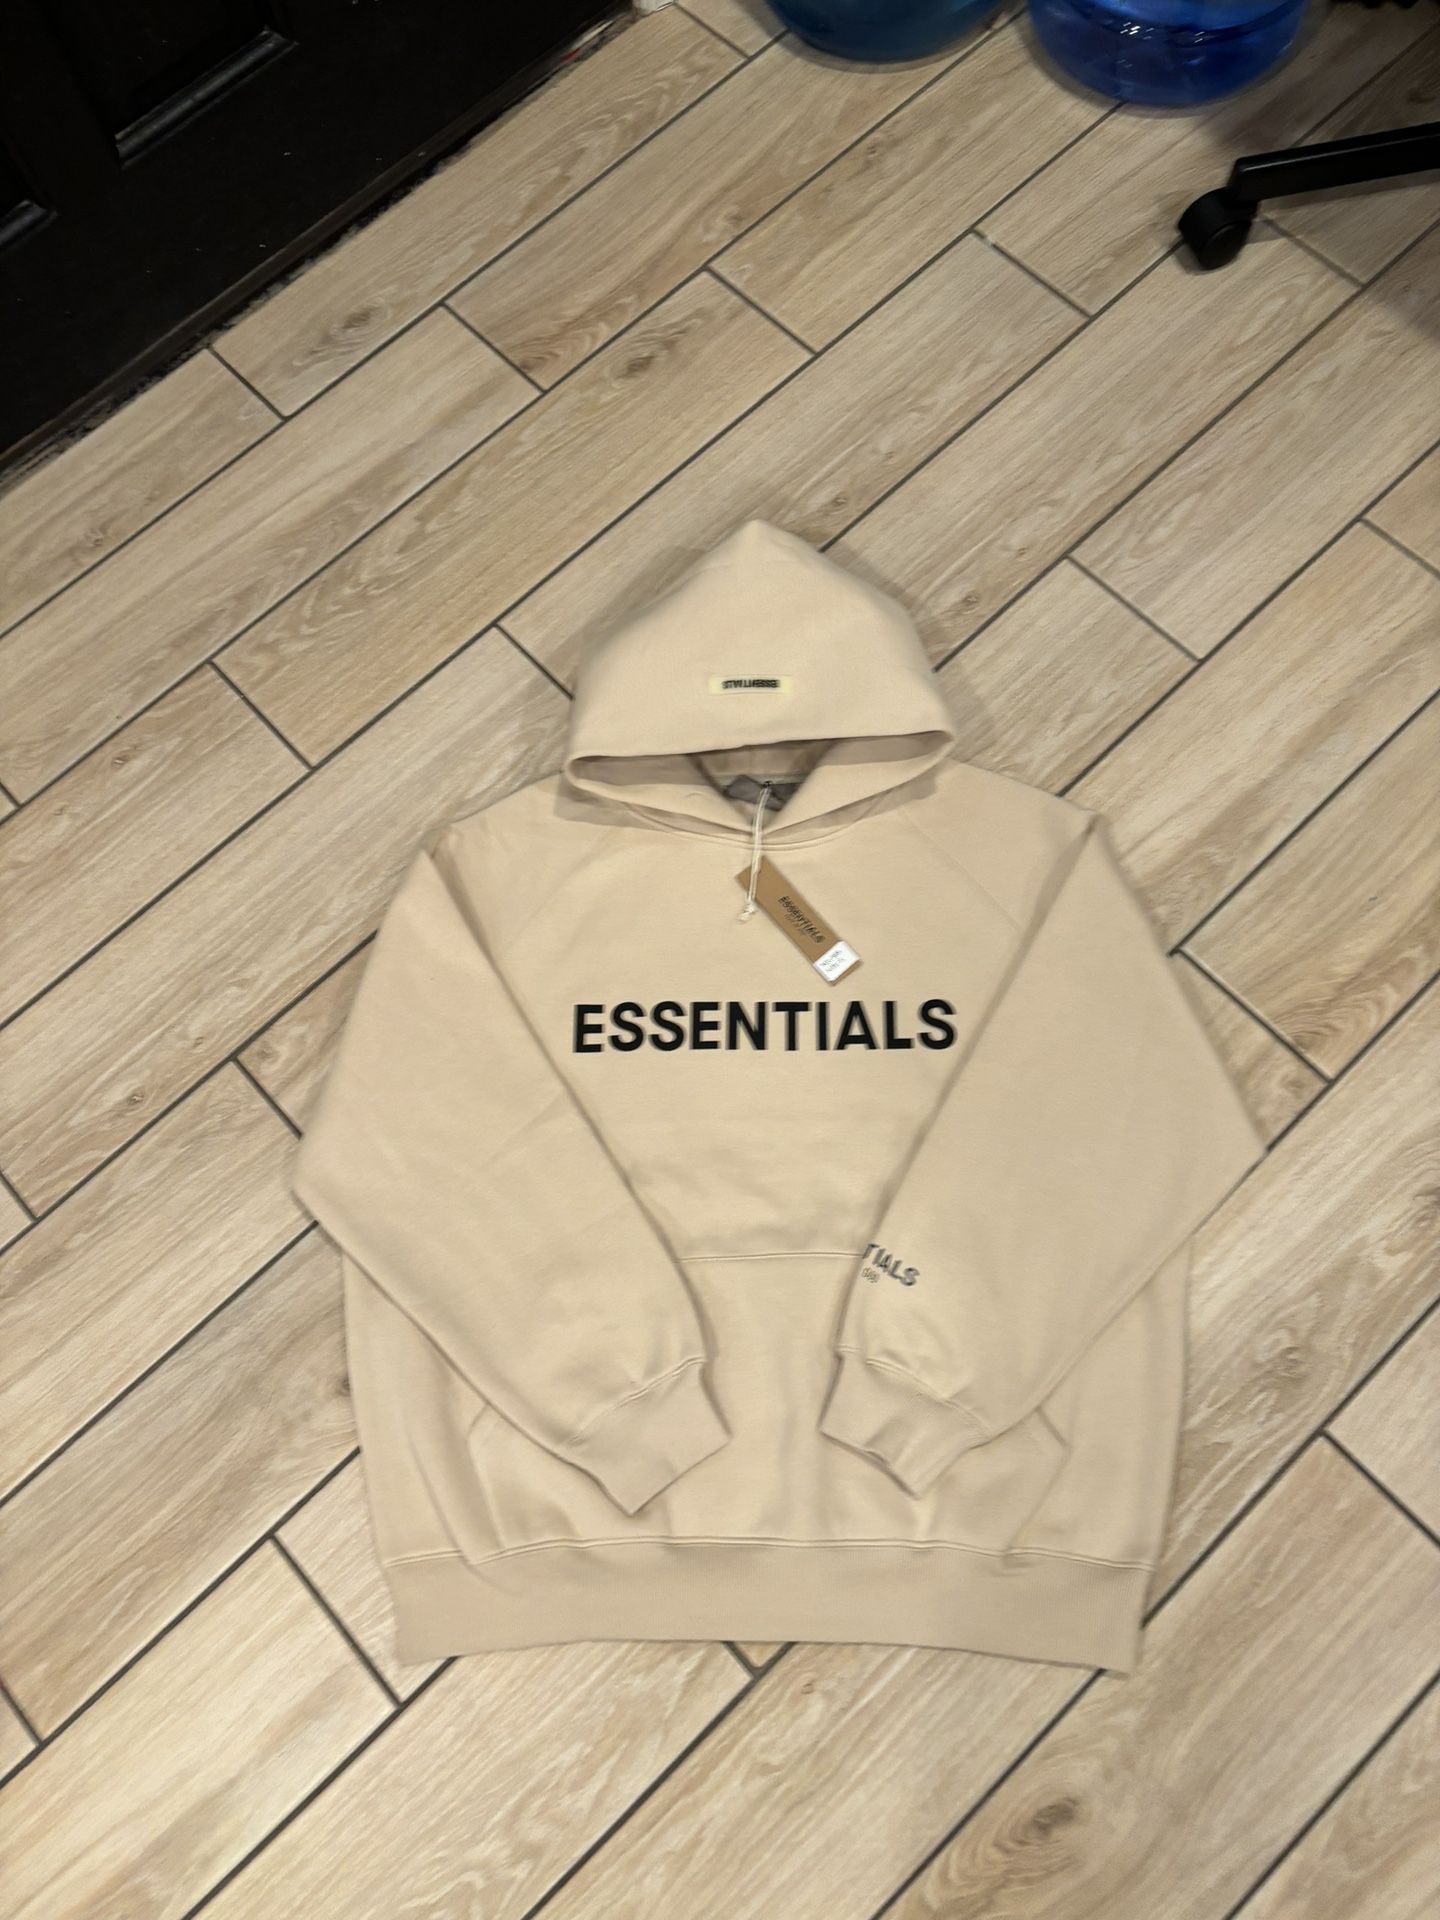 Essentials hoodie 